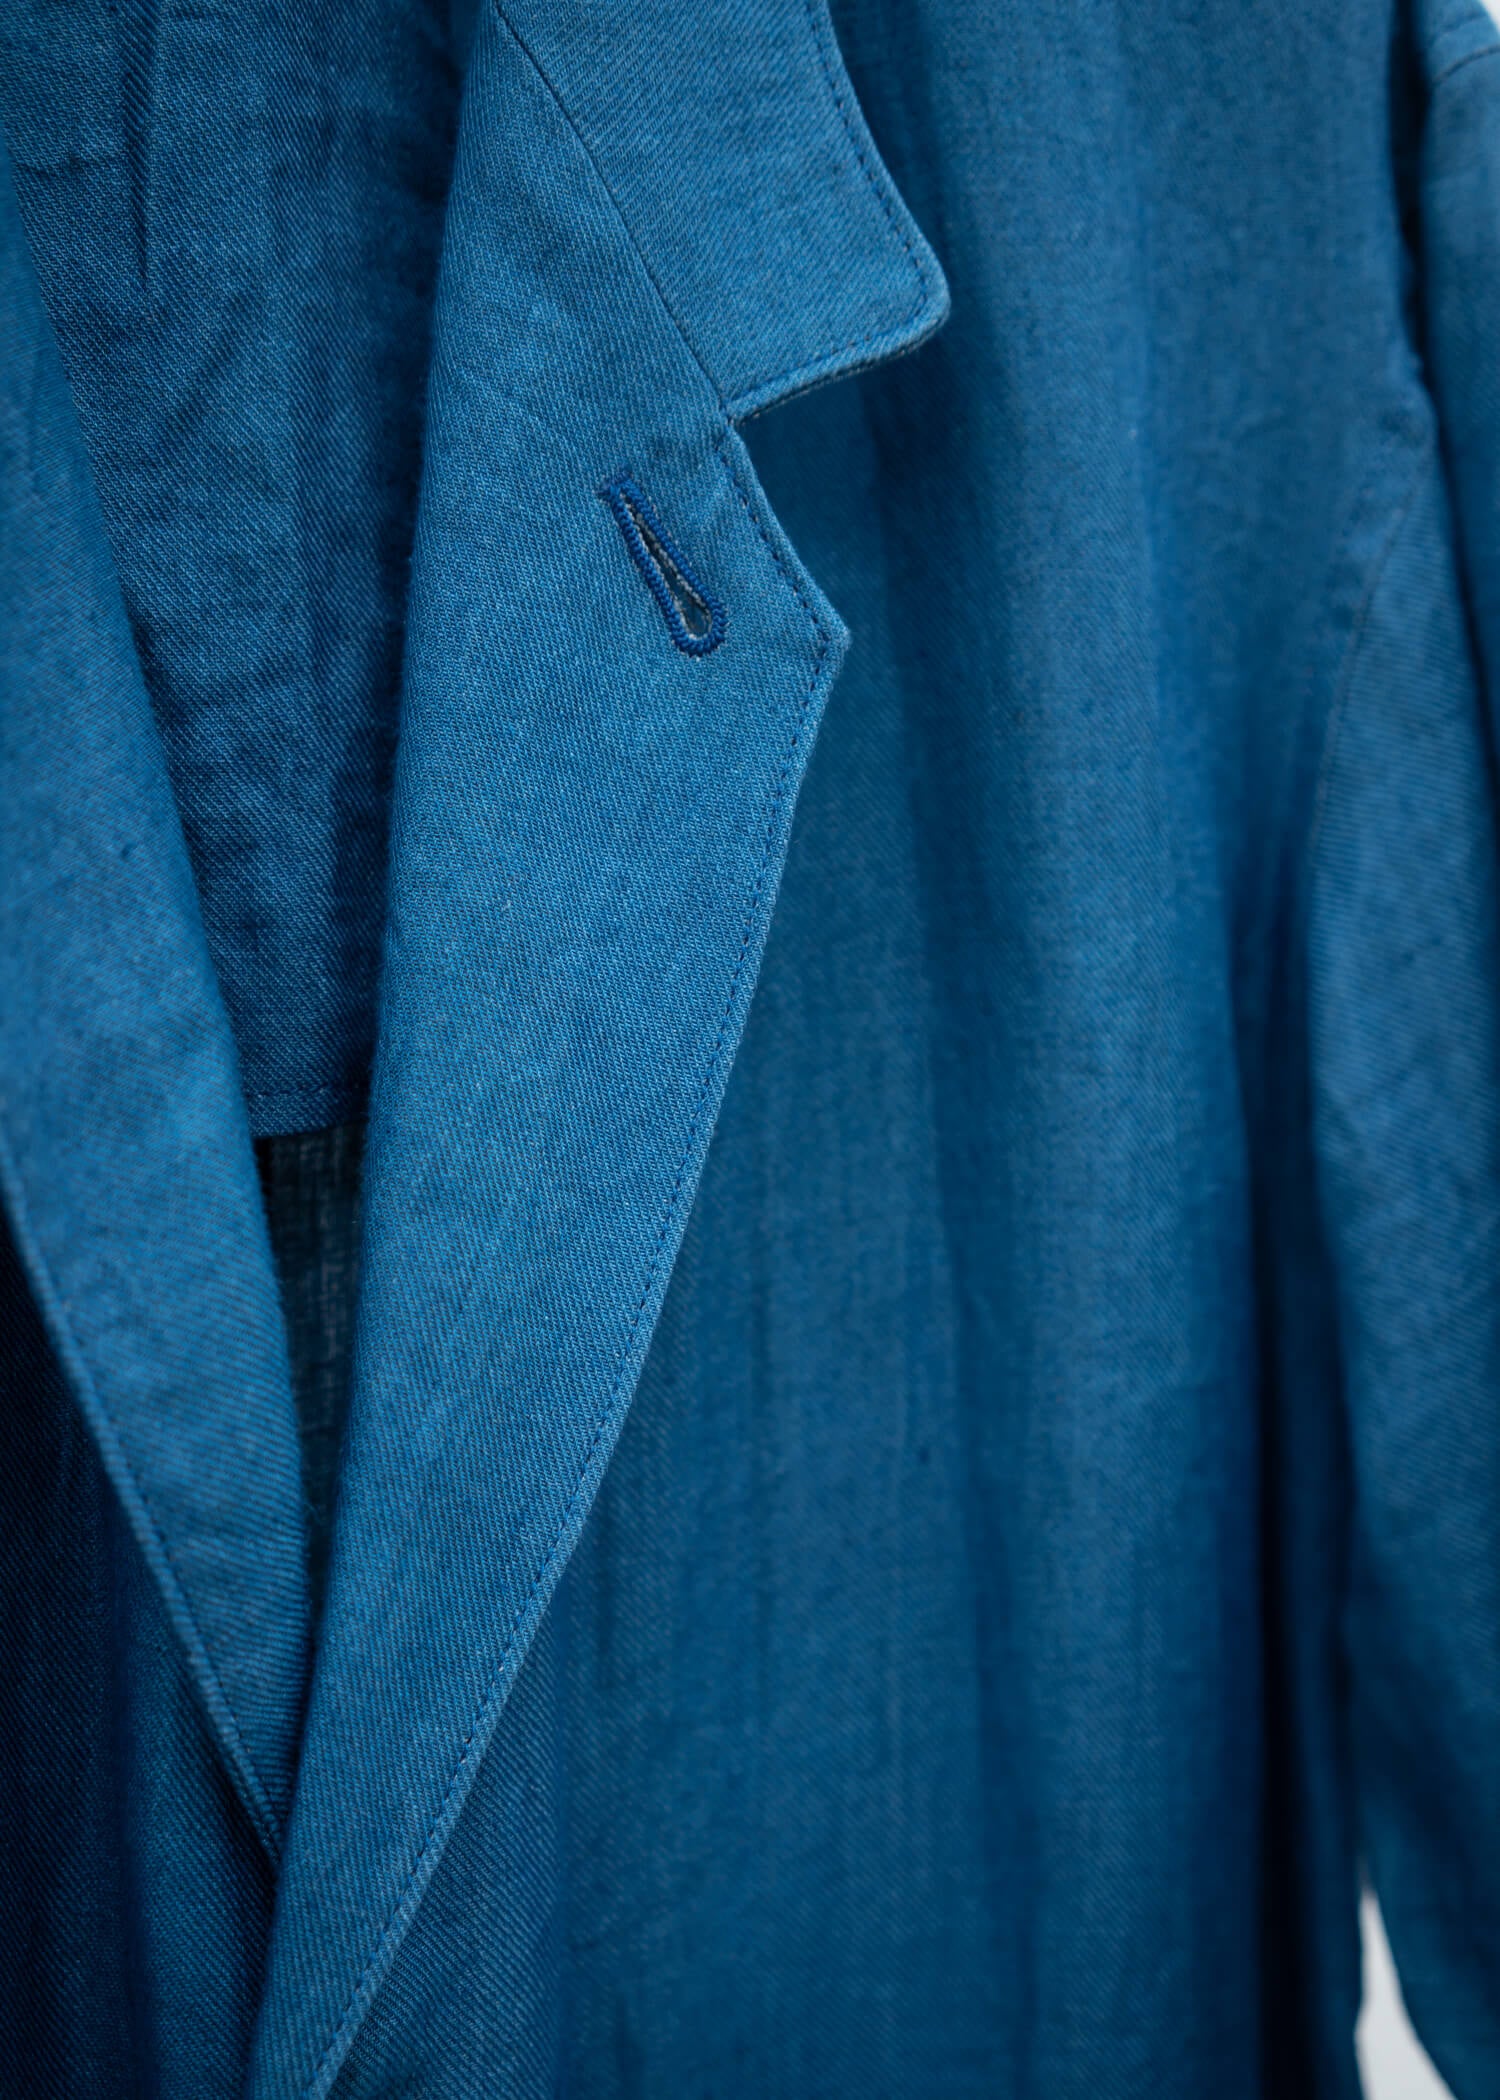 YOHJI YAMAMOTO POUR HOMME  linen chester coat 藍染